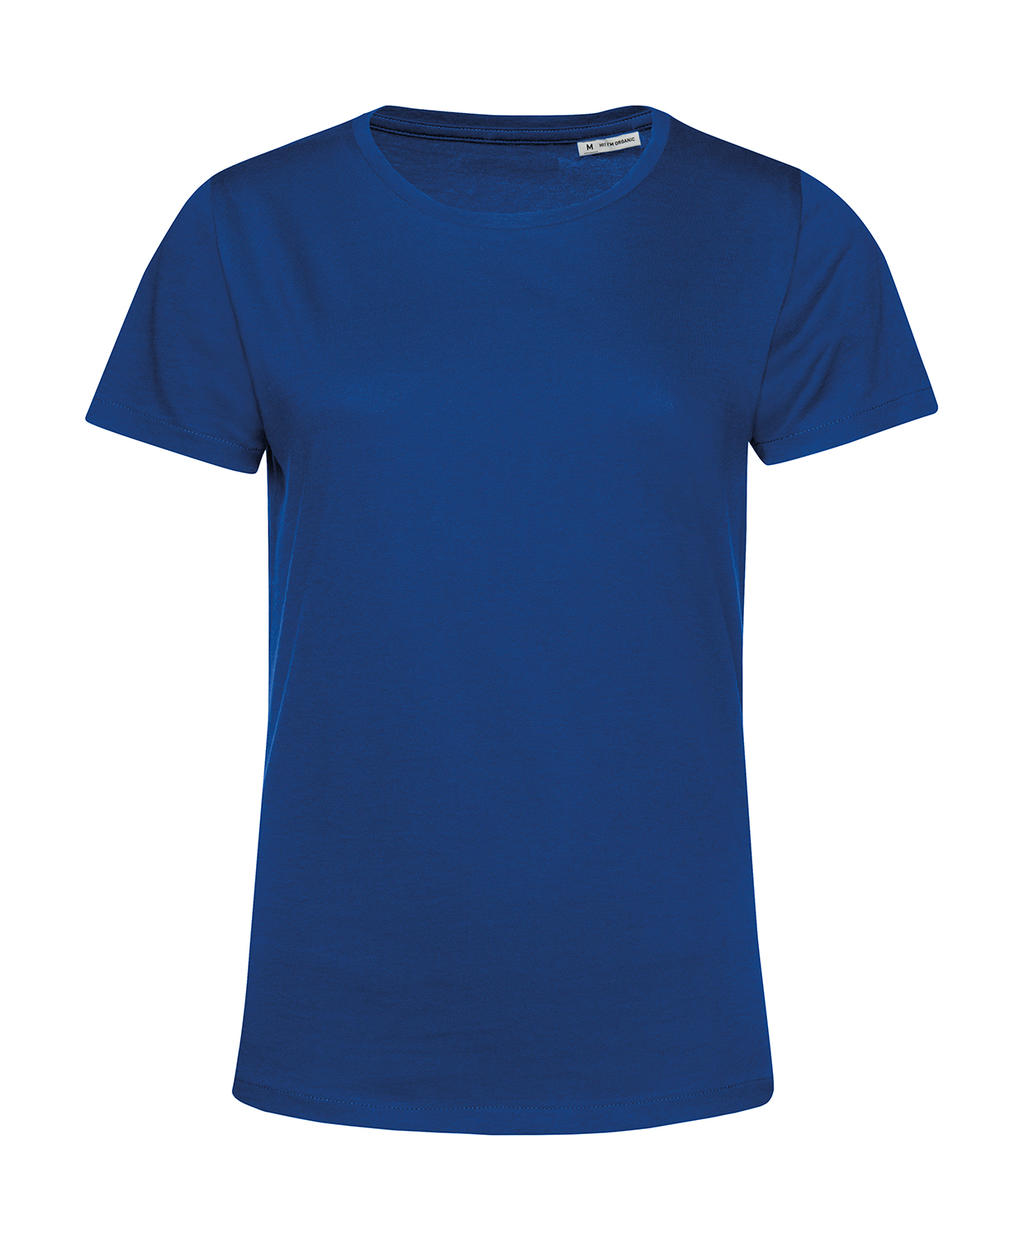 Tričko dámské BC Organic Inspire E150 - modré, M